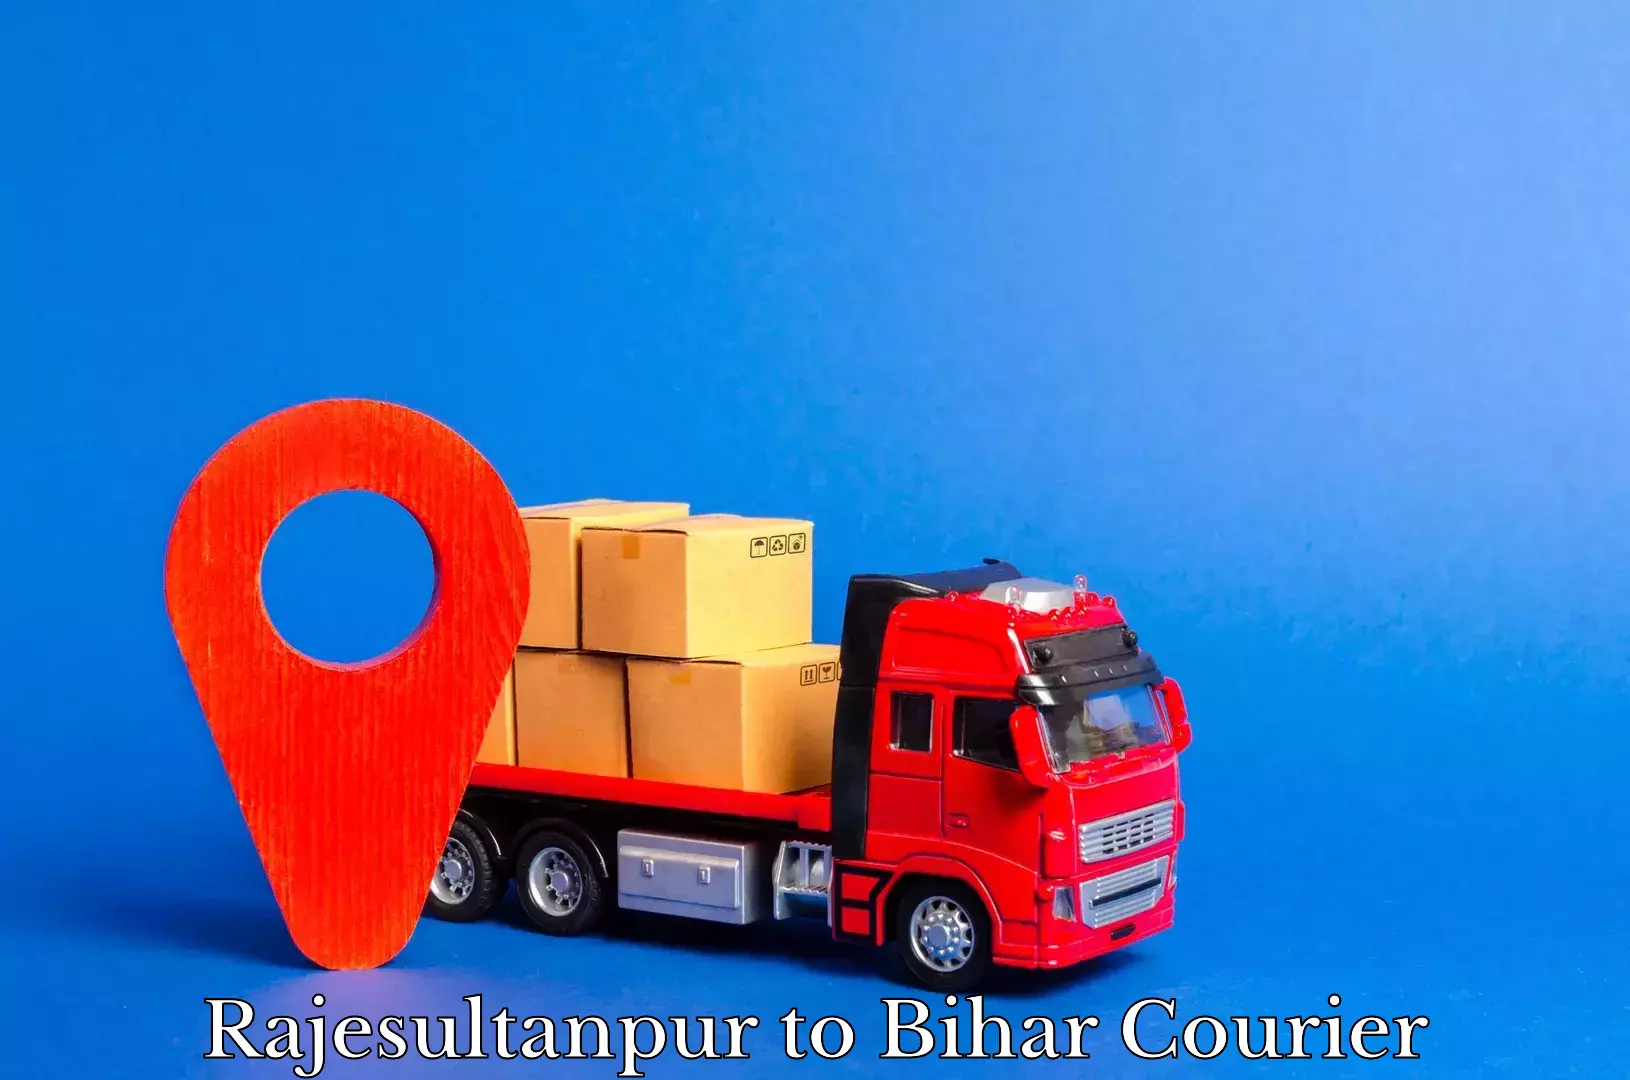 On-demand delivery Rajesultanpur to Bihar